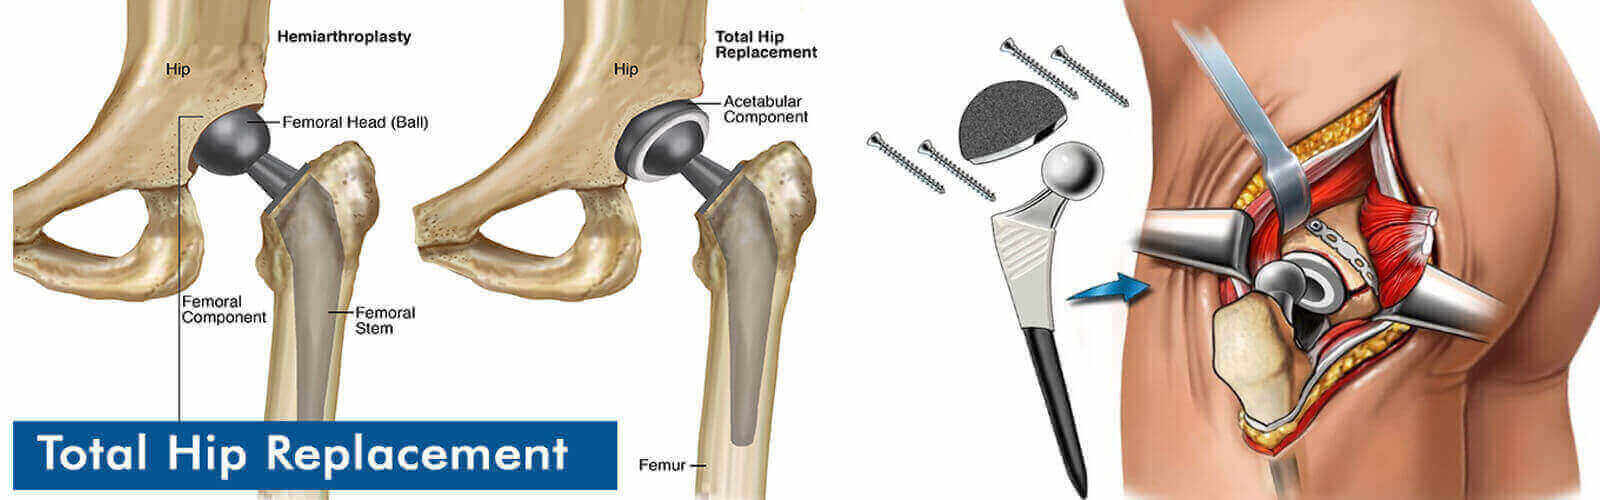 Hip Replacement Surgery Or Hip Resurfacing in Southampton